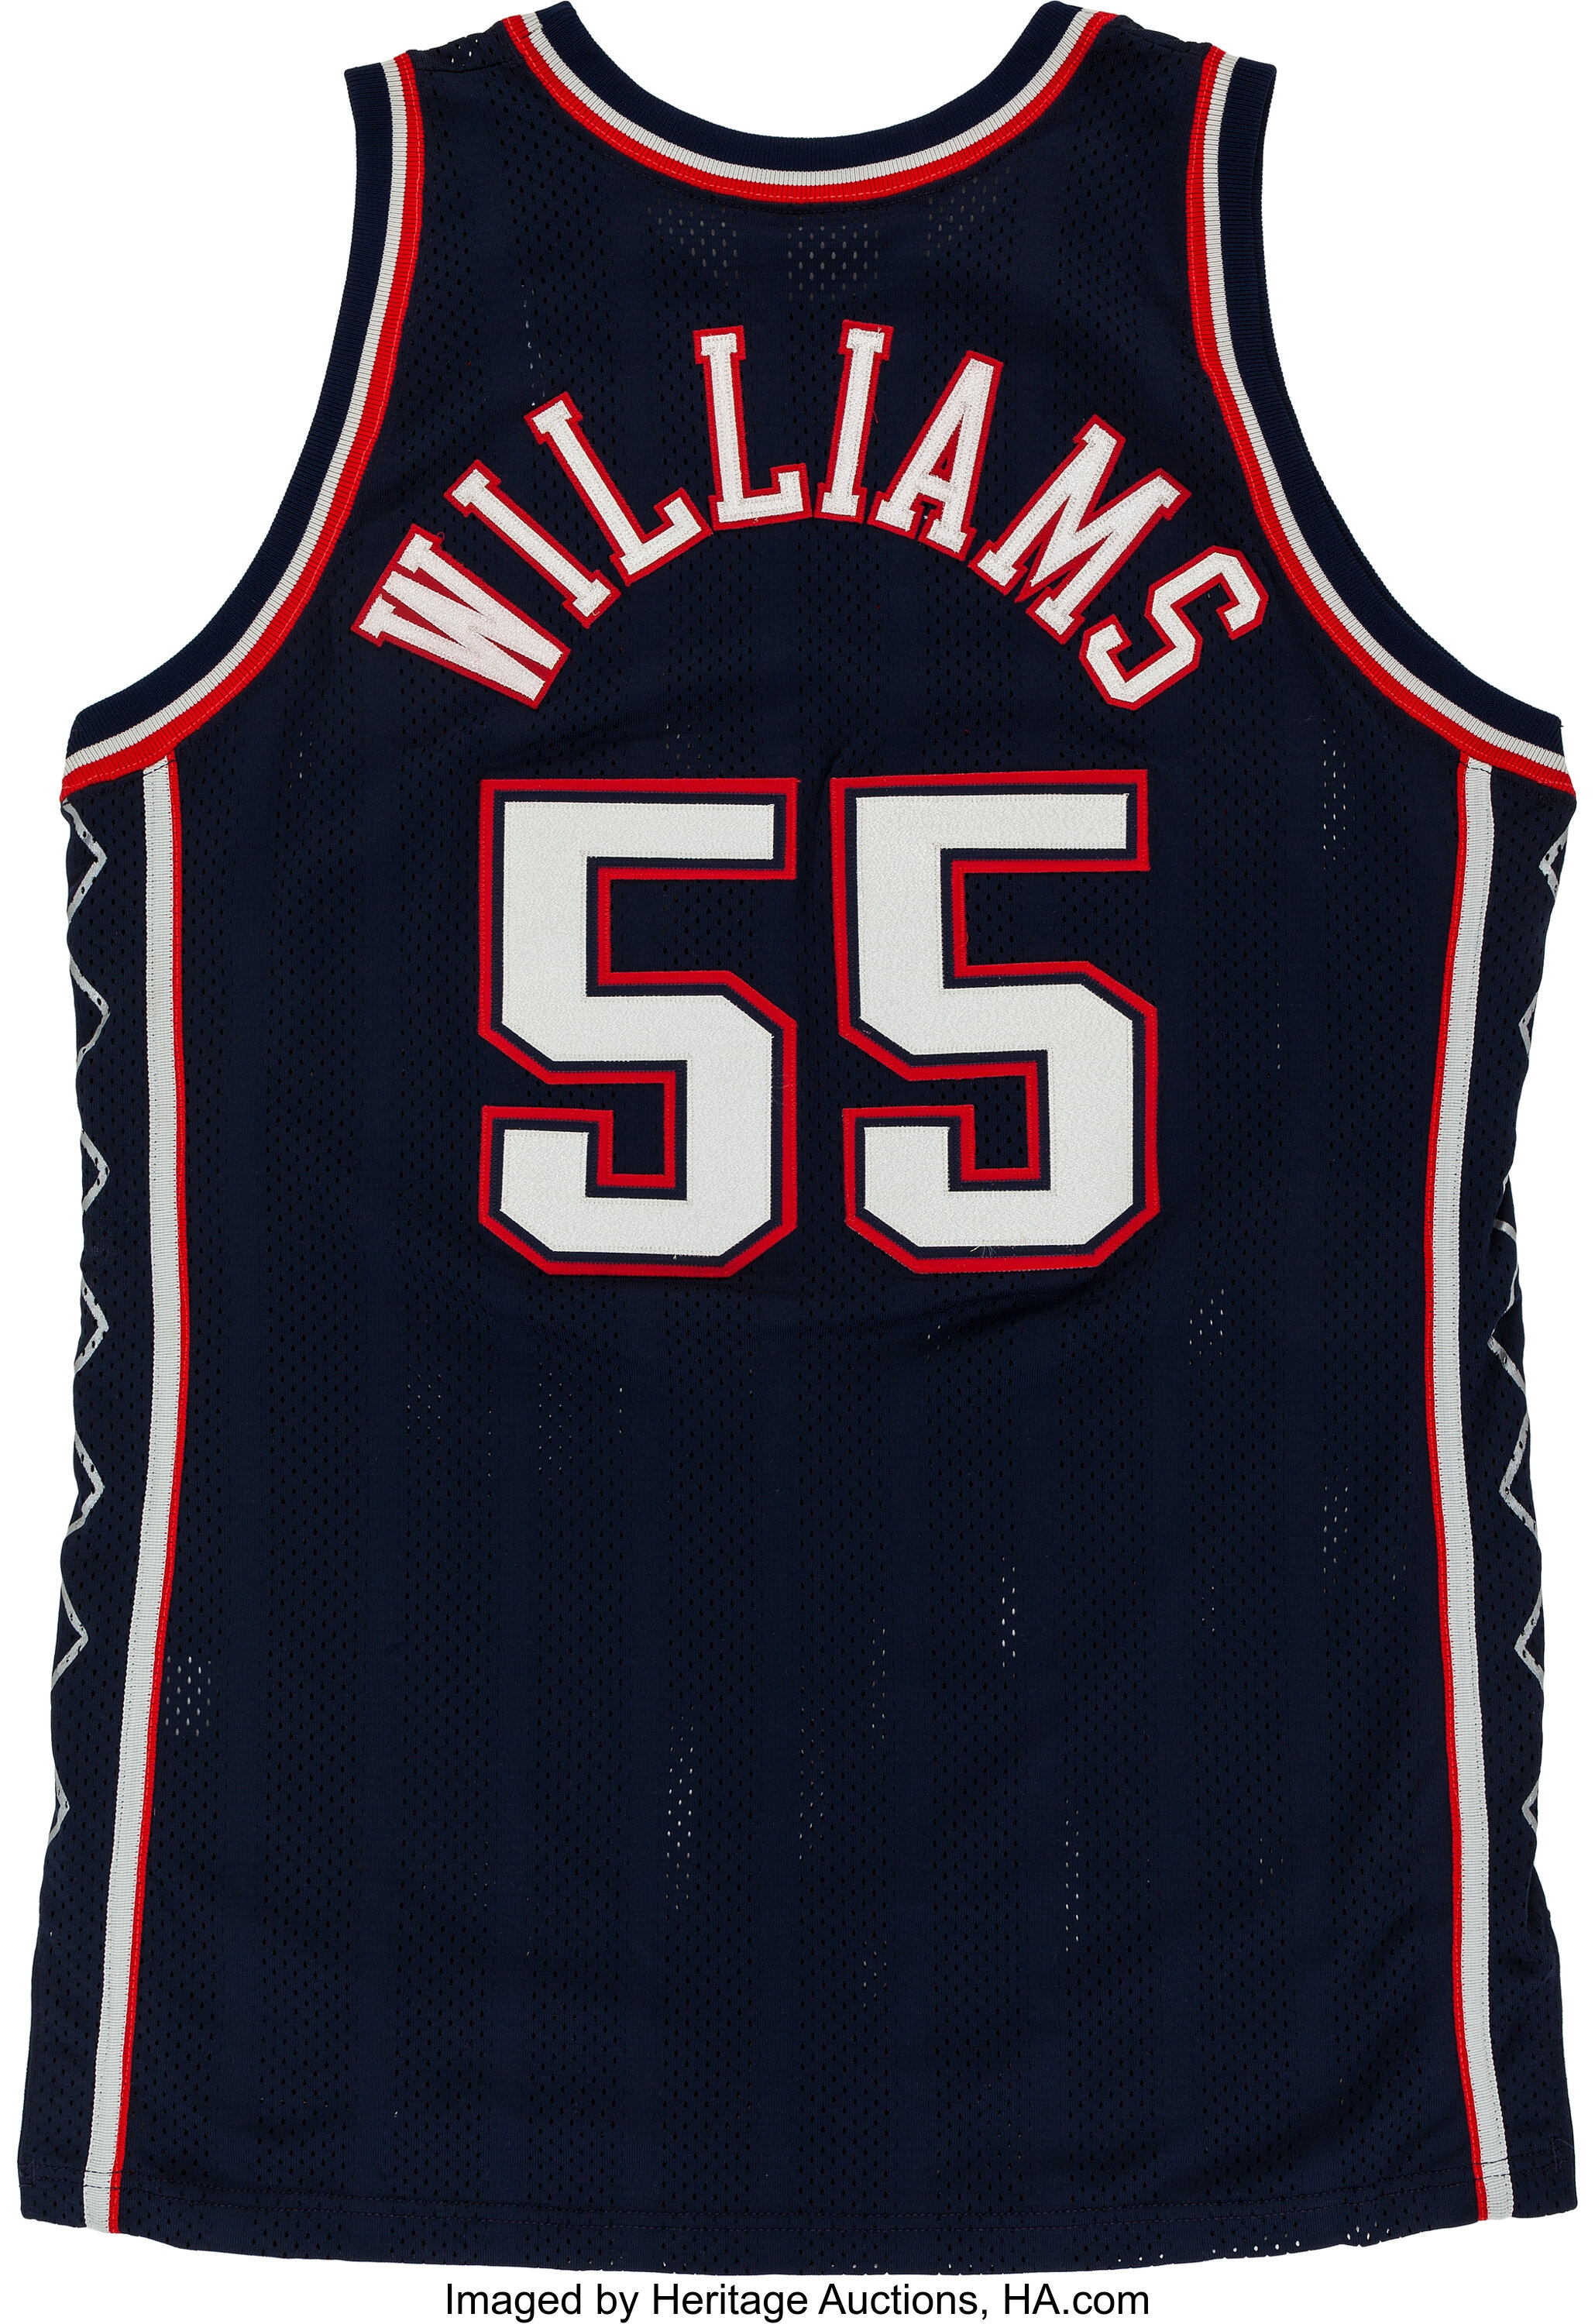 Jayson Williams - New Jersey Nets (NBA Basketball Card) 1995-96